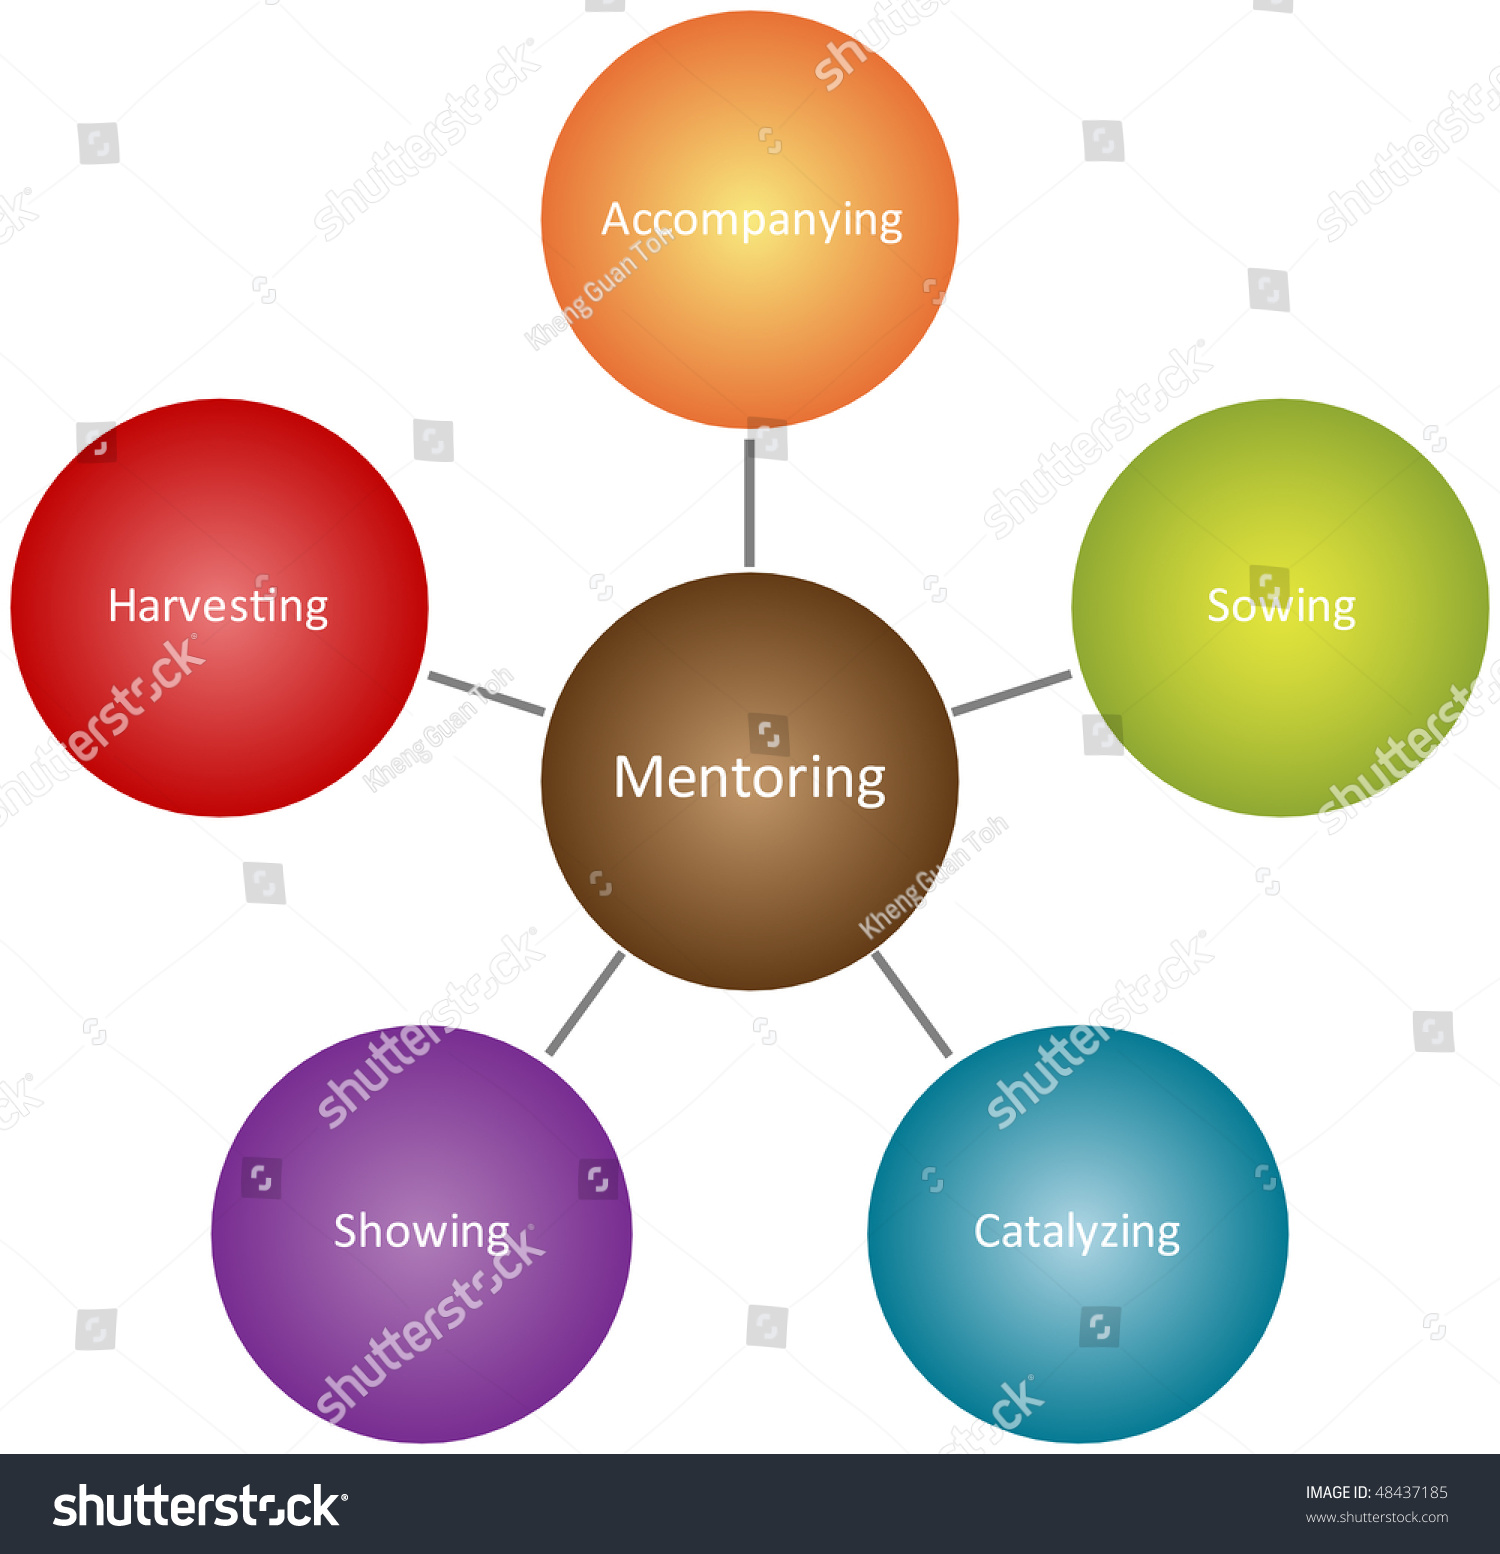 Mentoring Qualities Management Business Strategy Concept Diagram Illustration 48437185 